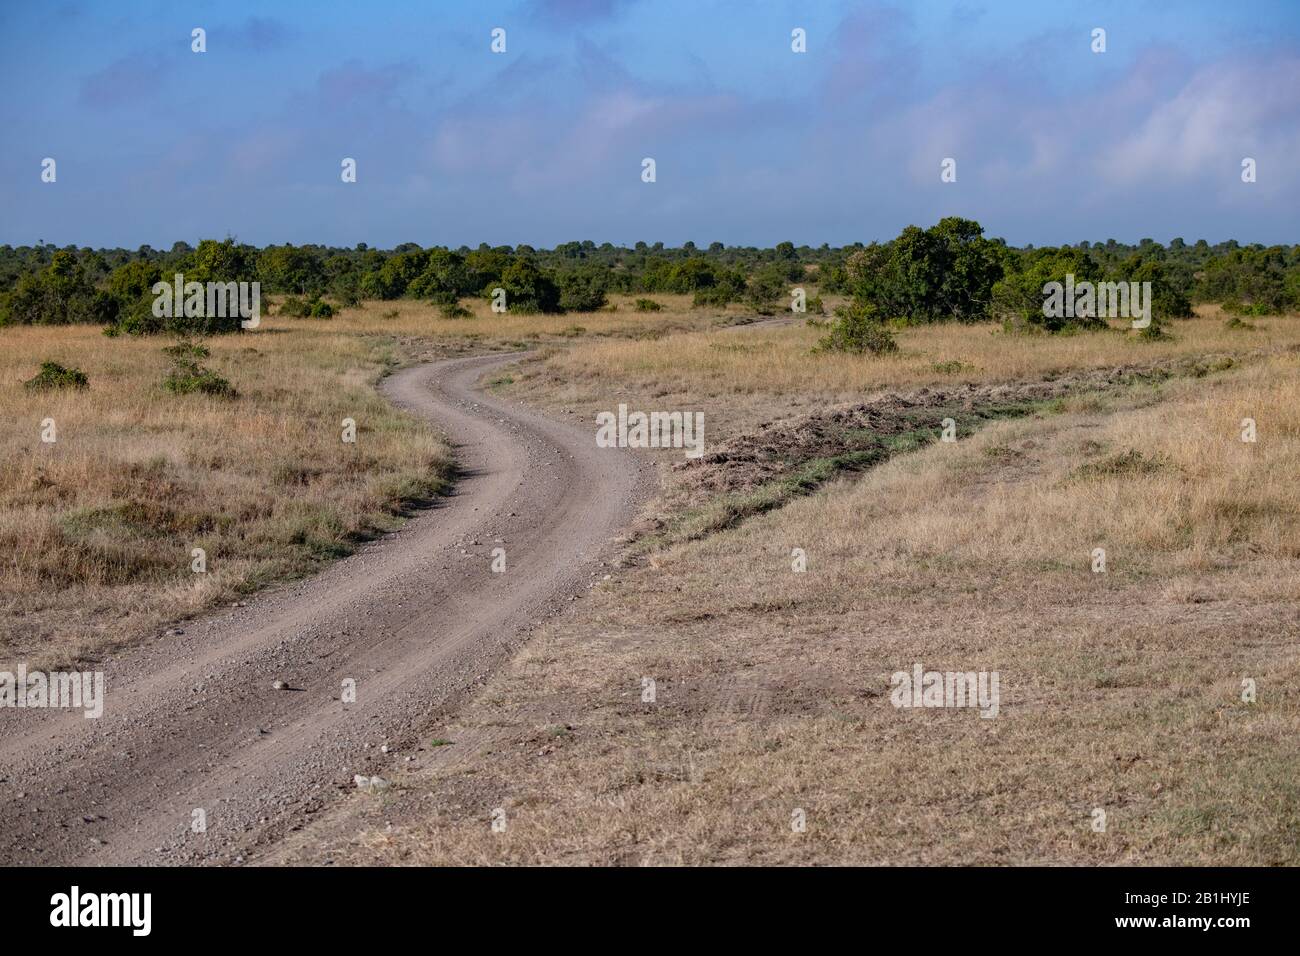 winding dusty road used by safari vehicles in the Masai Mara, Kenya Stock Photo